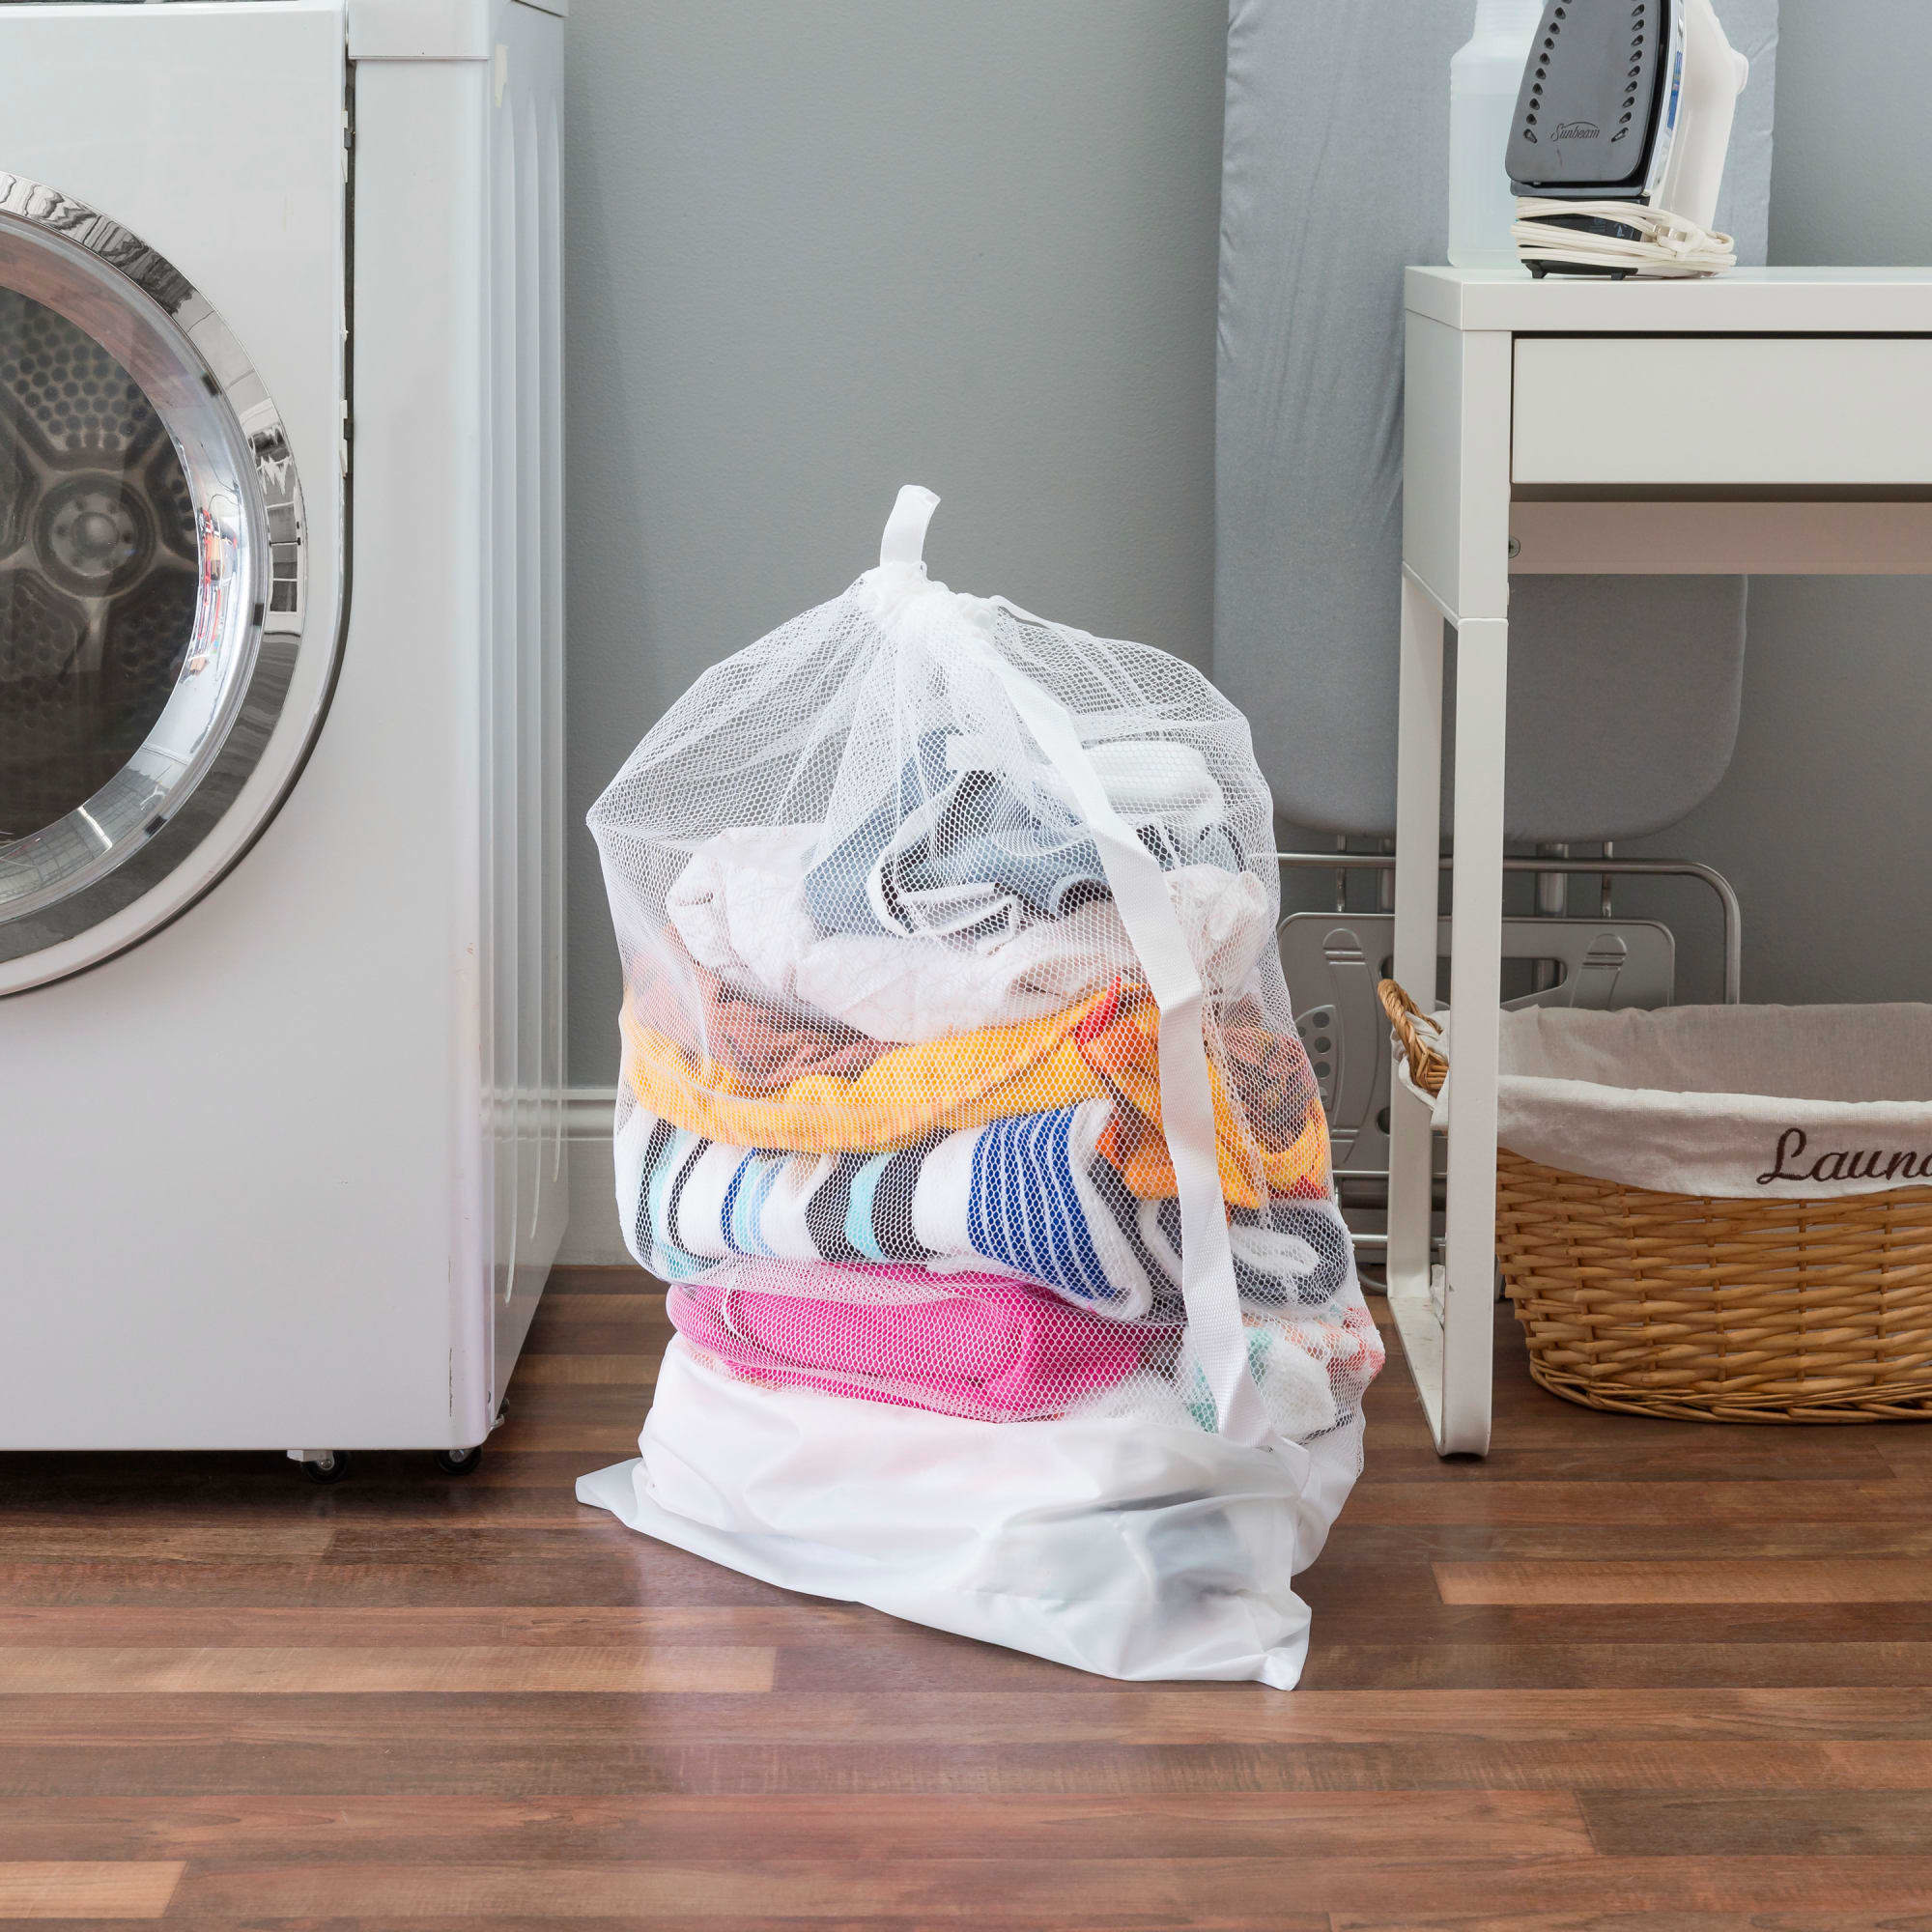 Home Basics Mesh Laundry Bag with Handle